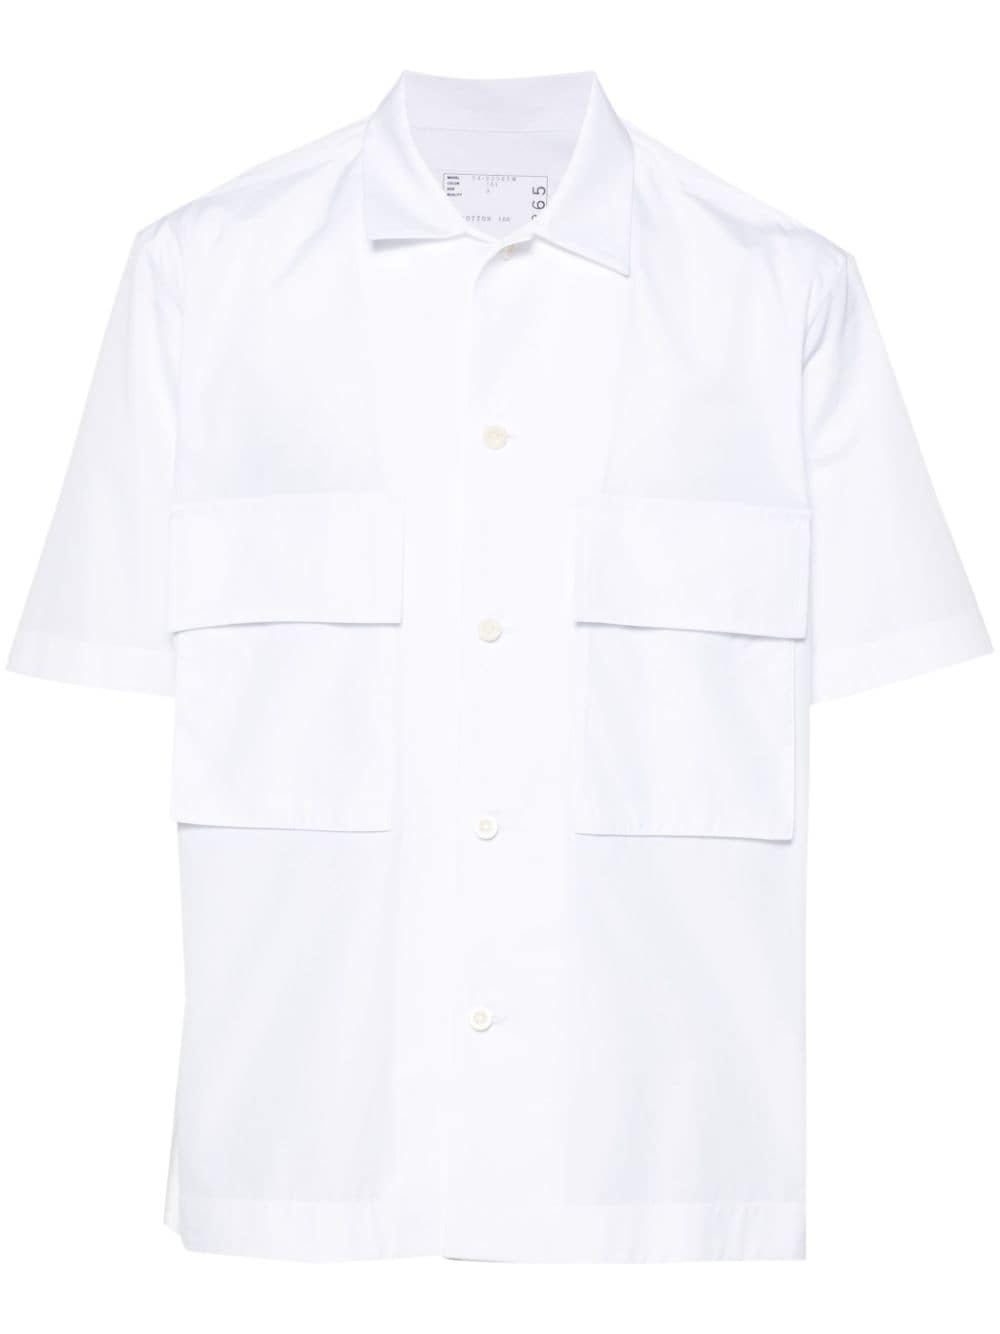 Thomas Mason cotton shirt - 1